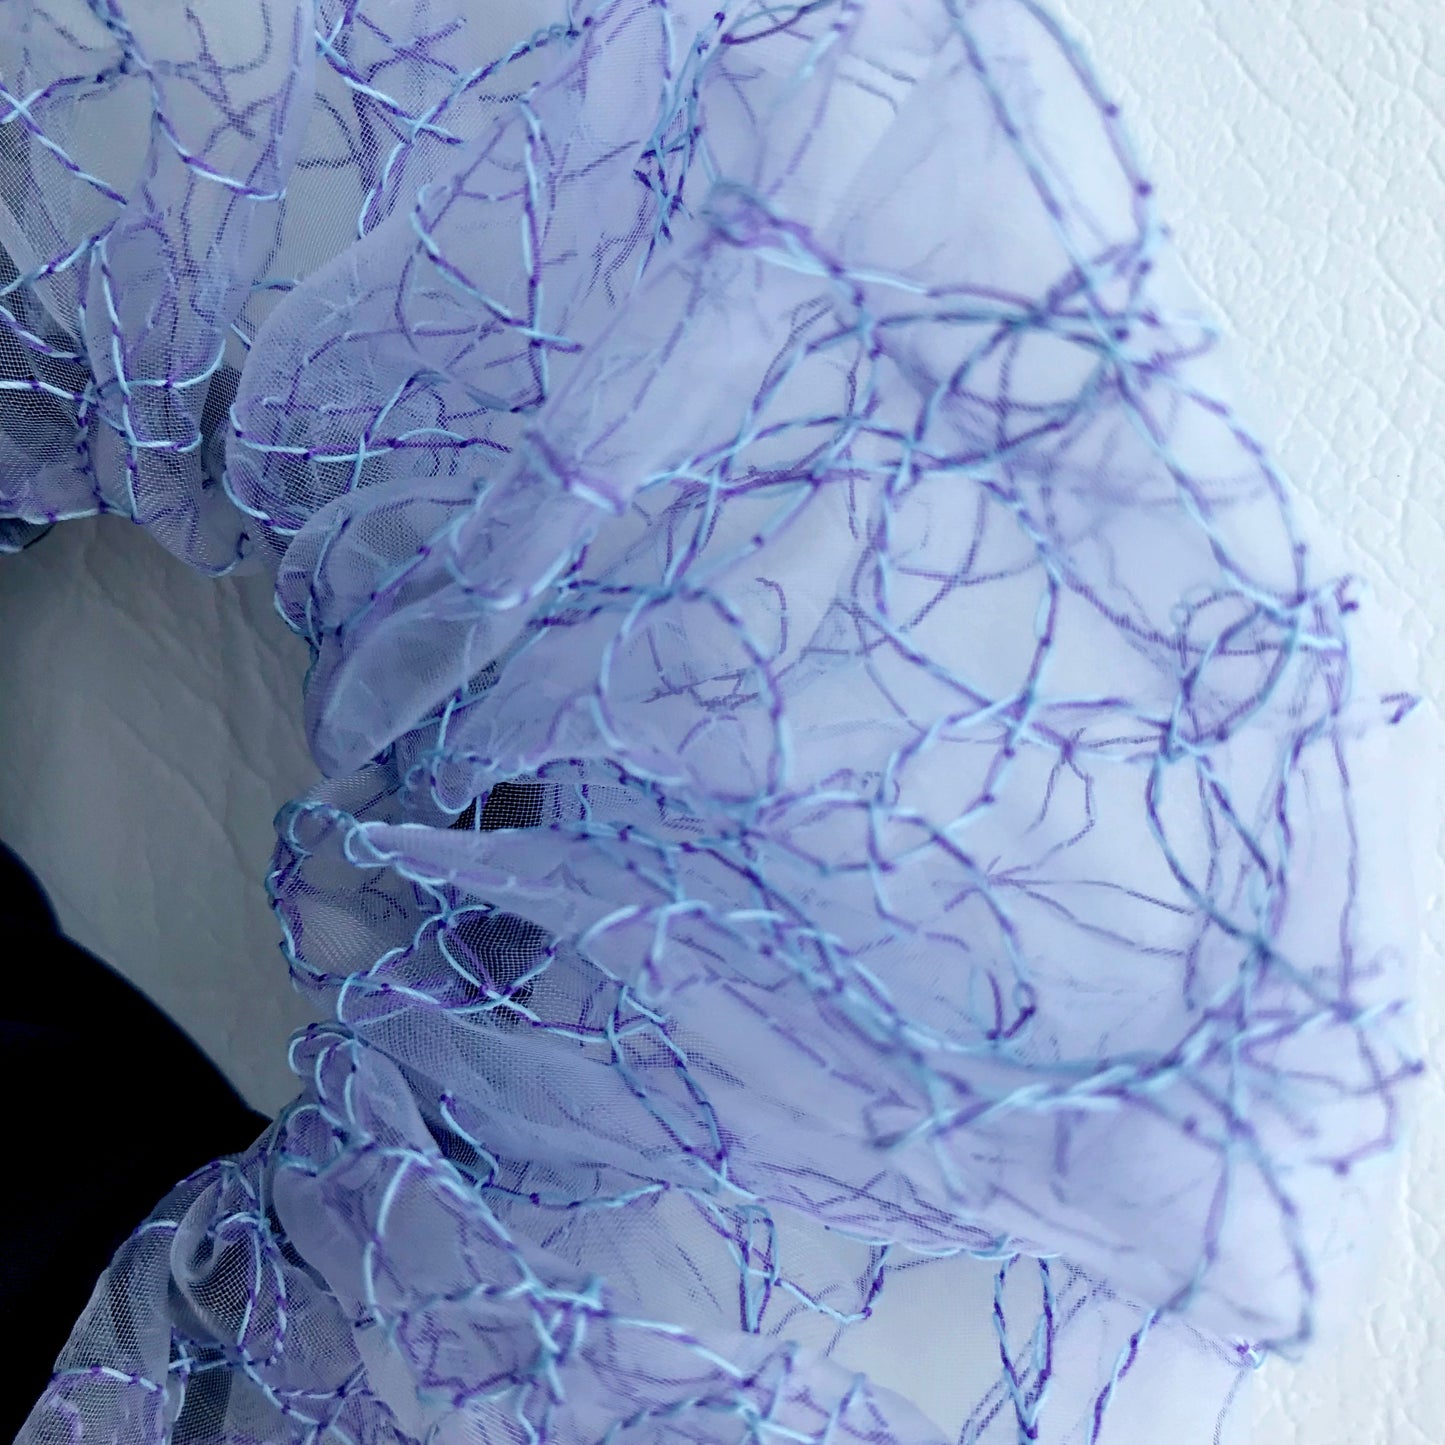 suimu(スイム)のミシン刺繍したオーガンジーとシフォン生地とのバイカラーシュシュ。透明感と浮遊感のあるヘアアクセサリー　仕事用　ウエディング